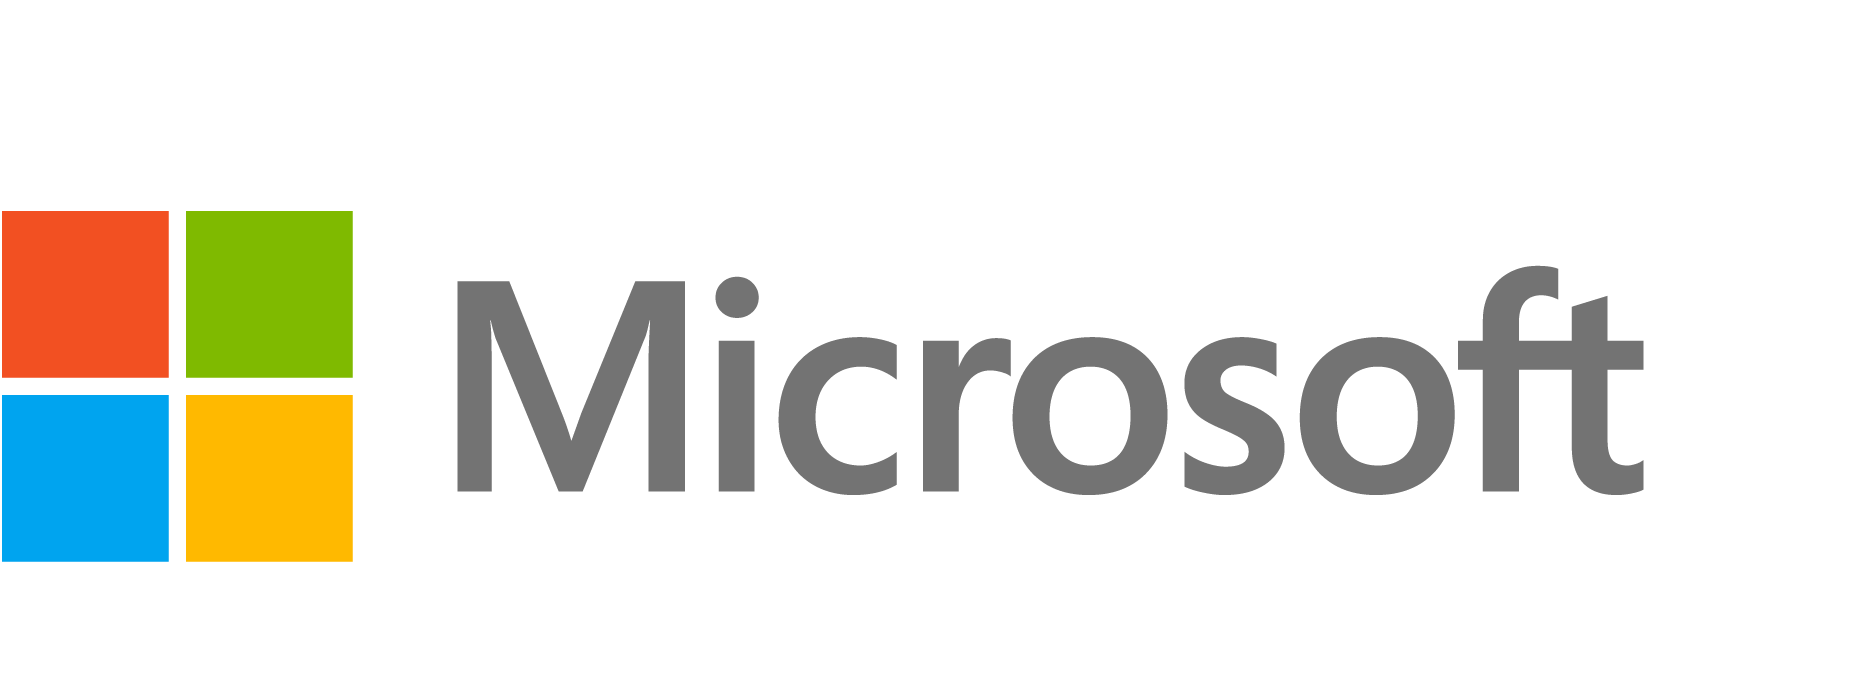 Image result for microsoft logo png